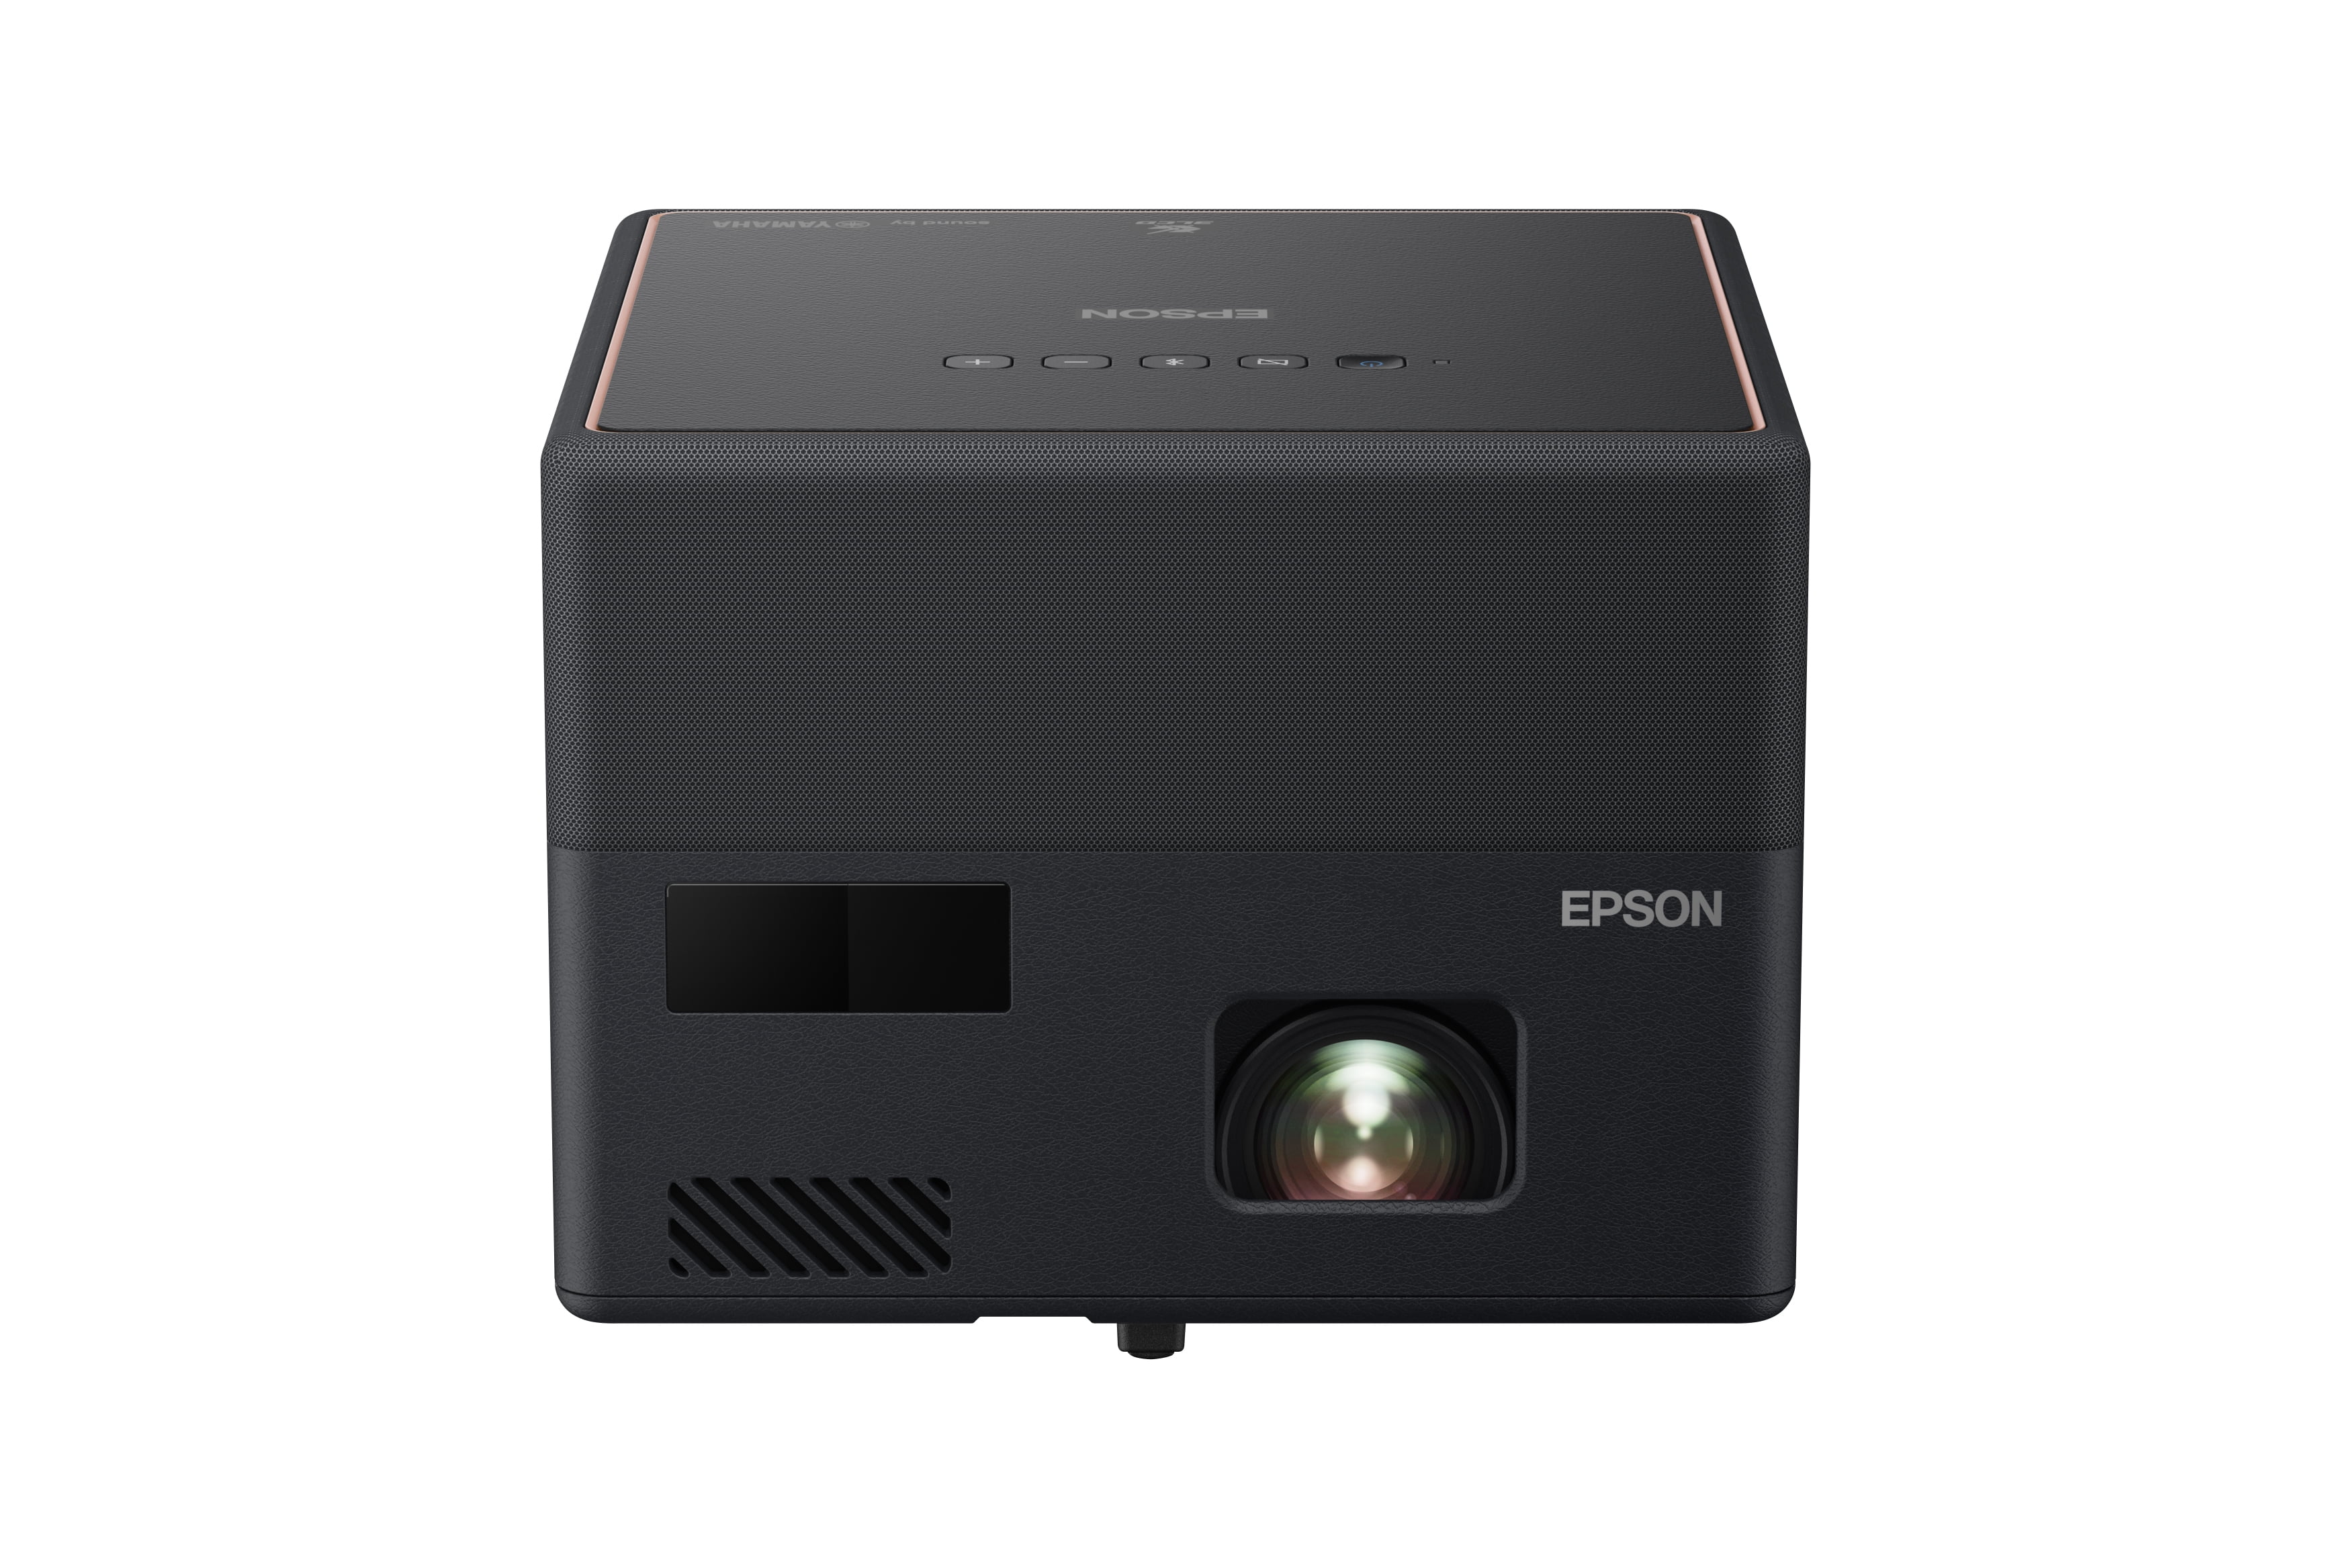 EpiqVision® Flex CO-W01 Portable Projector, Products